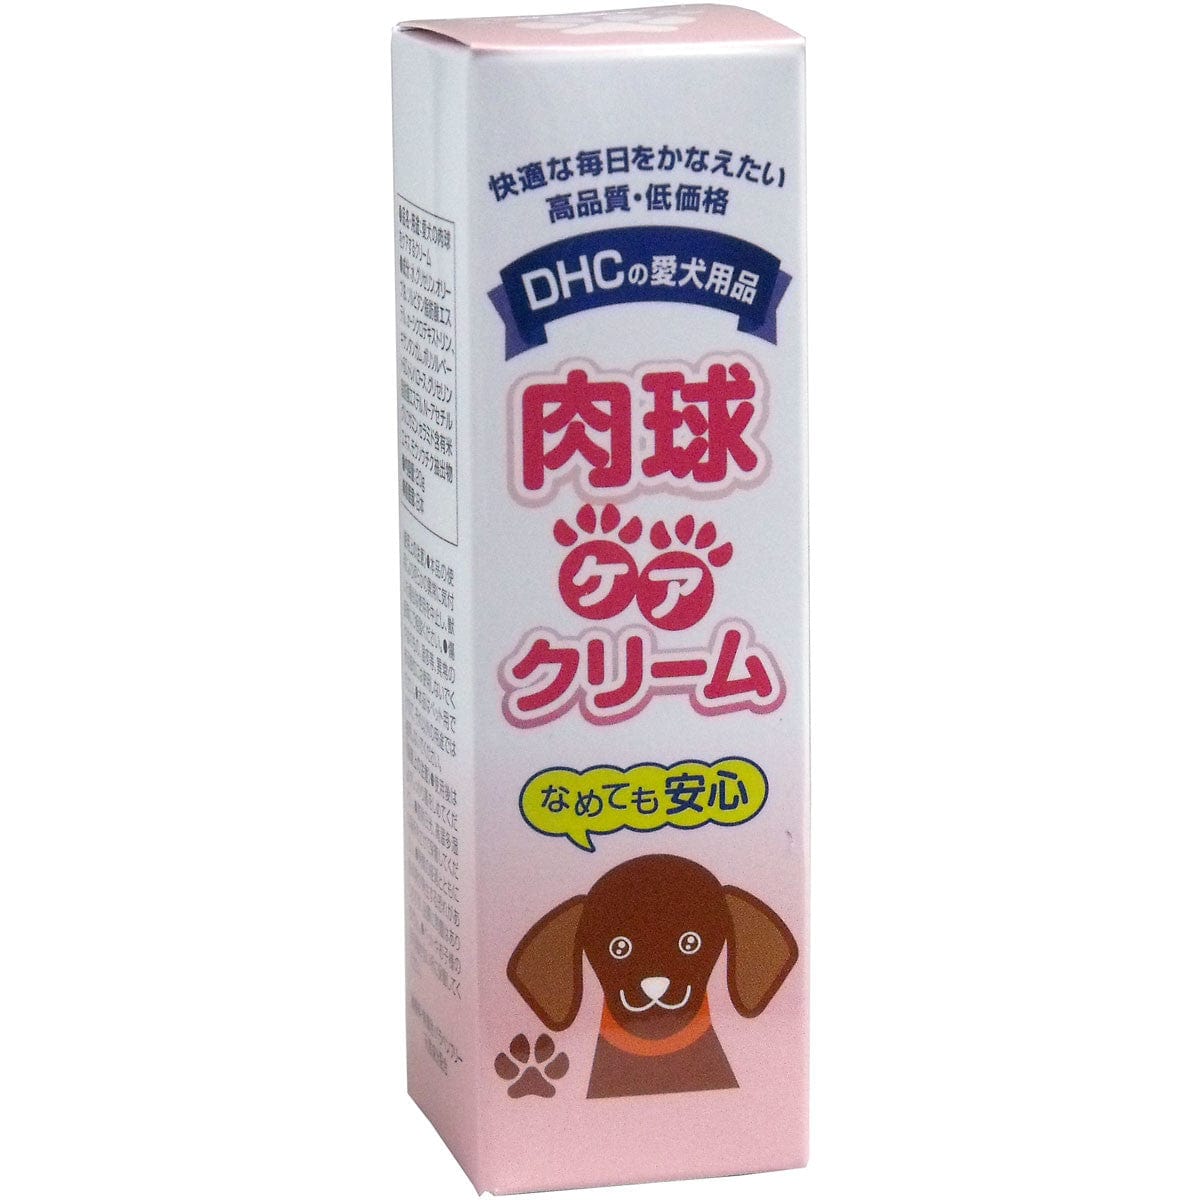 DHC - Paw Care Cream for Pet Dogs 20g -  Pet Paw Cream  Durio.sg